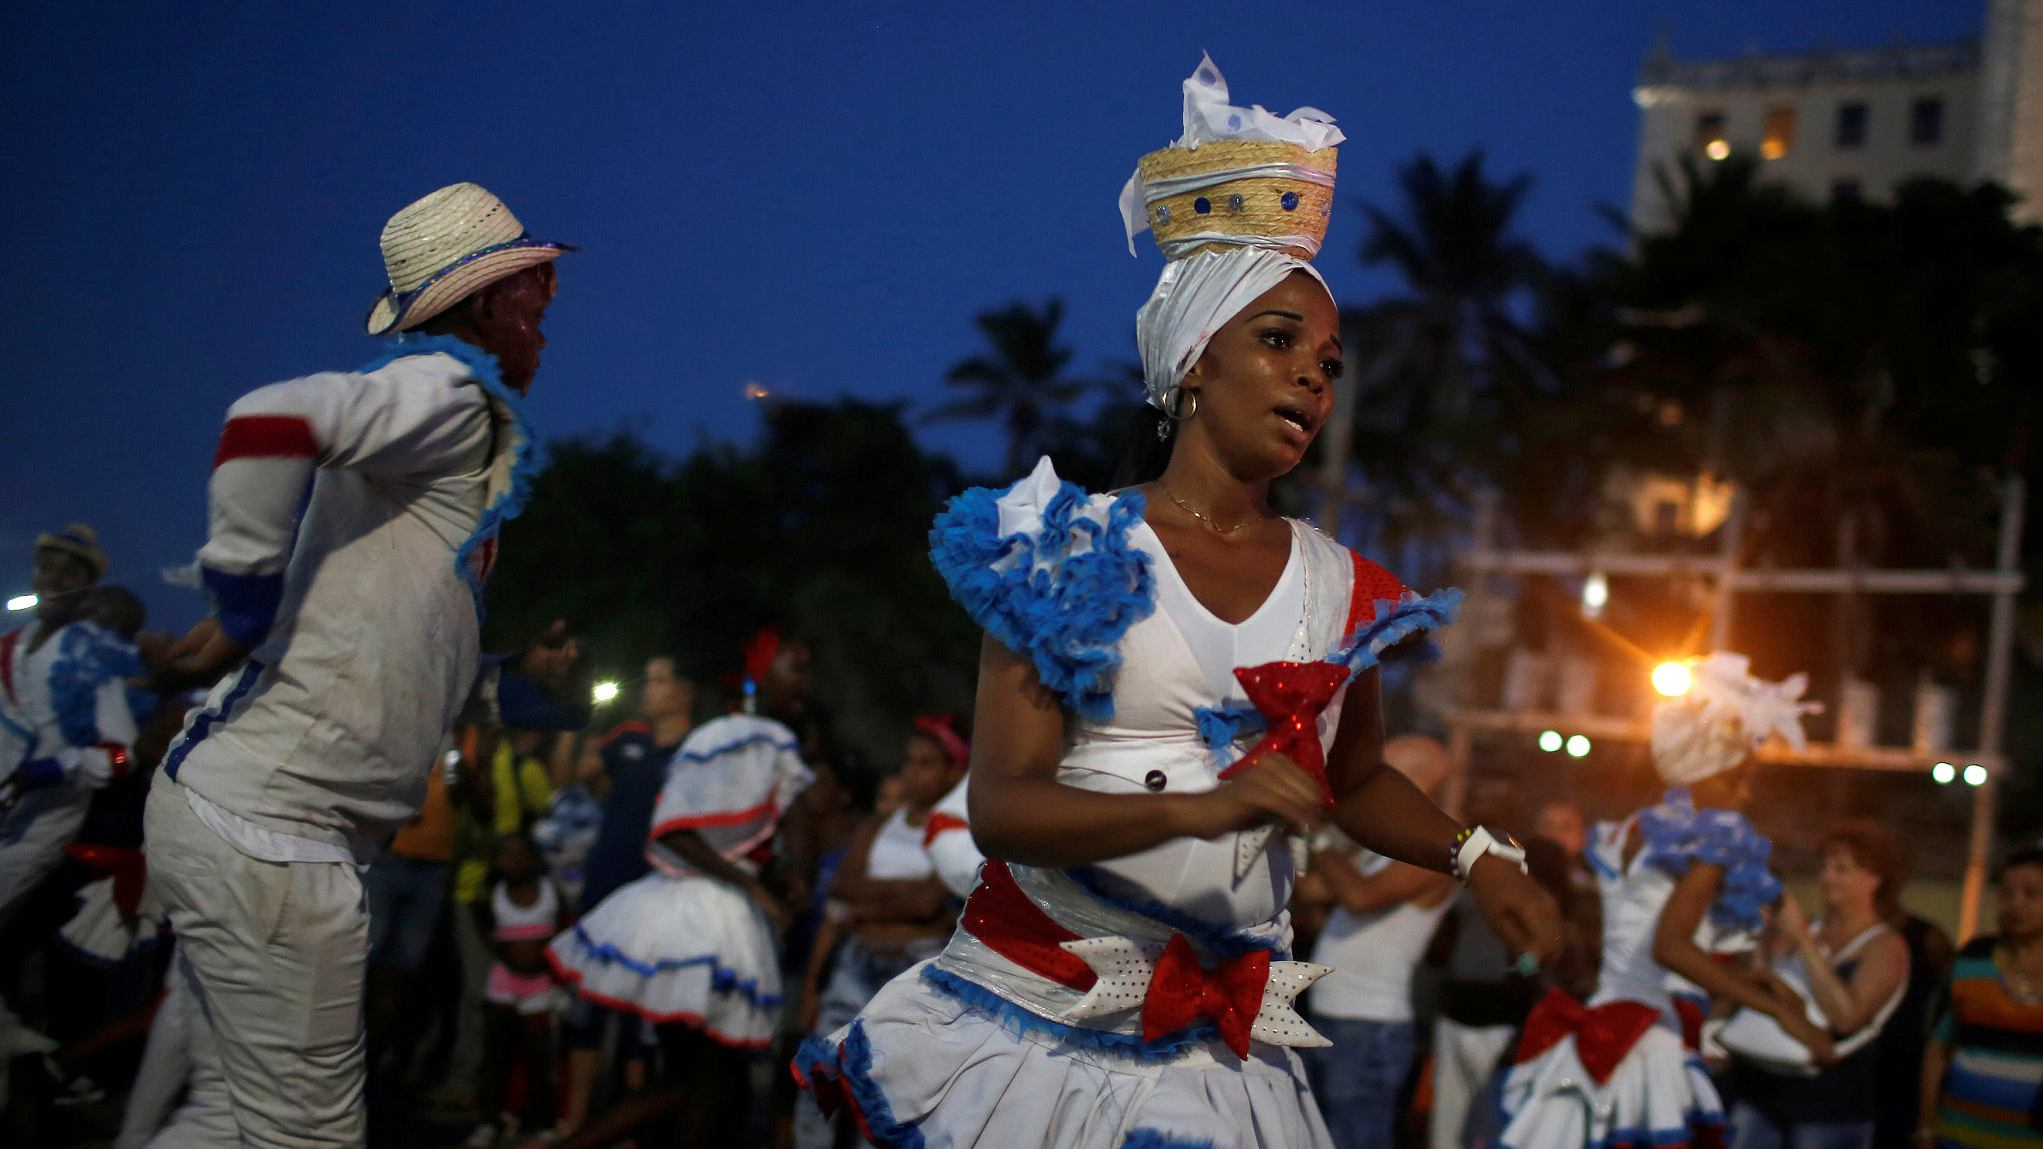 Cuban culture celebrated at the colorful Havana Carnival CGTN